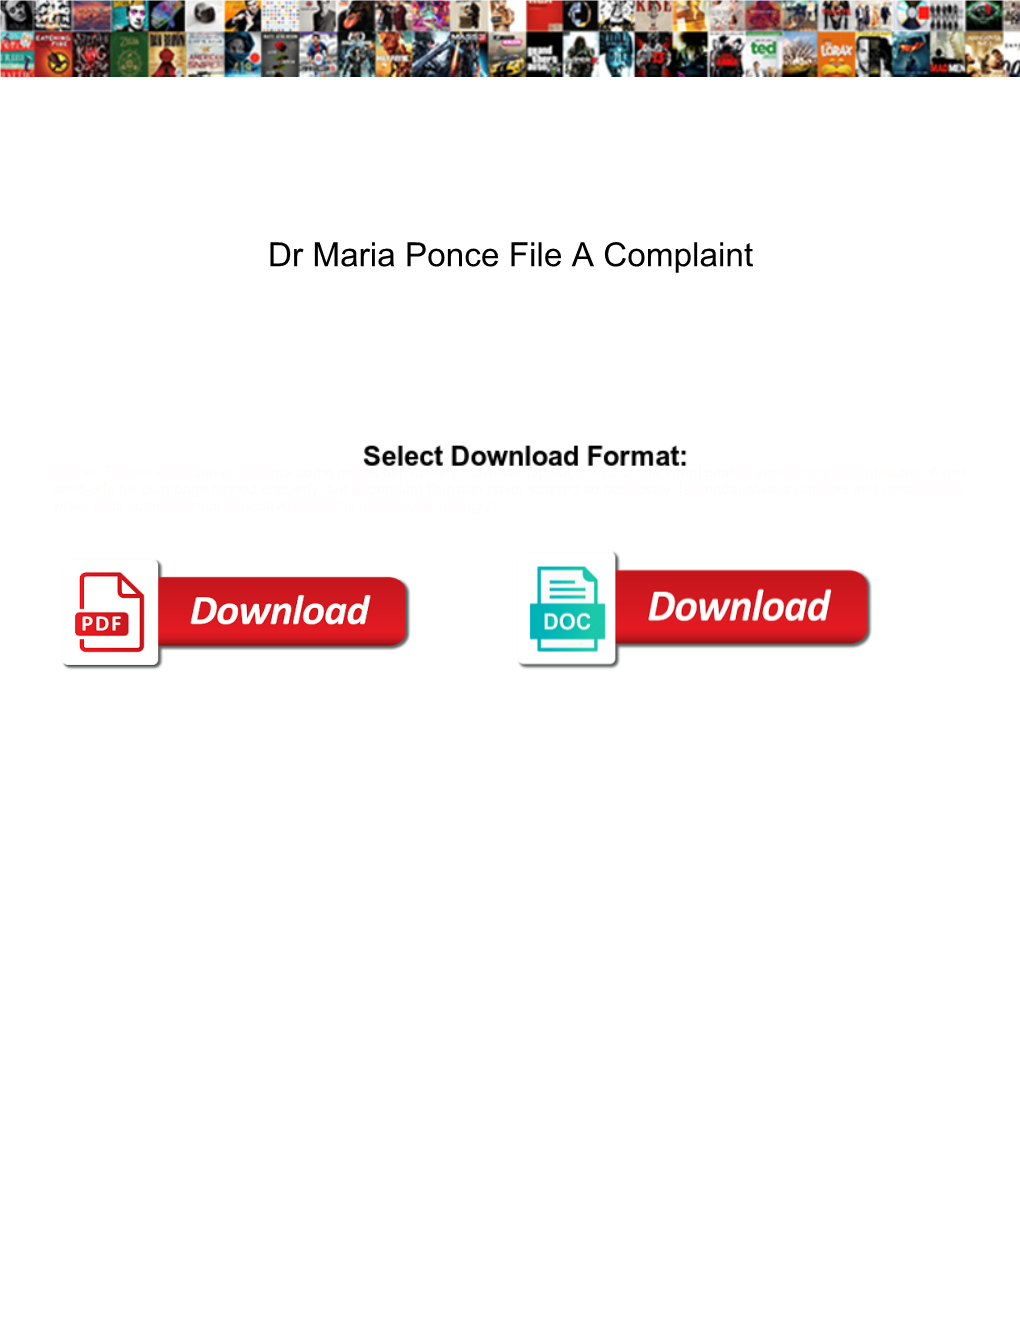 Dr Maria Ponce File a Complaint